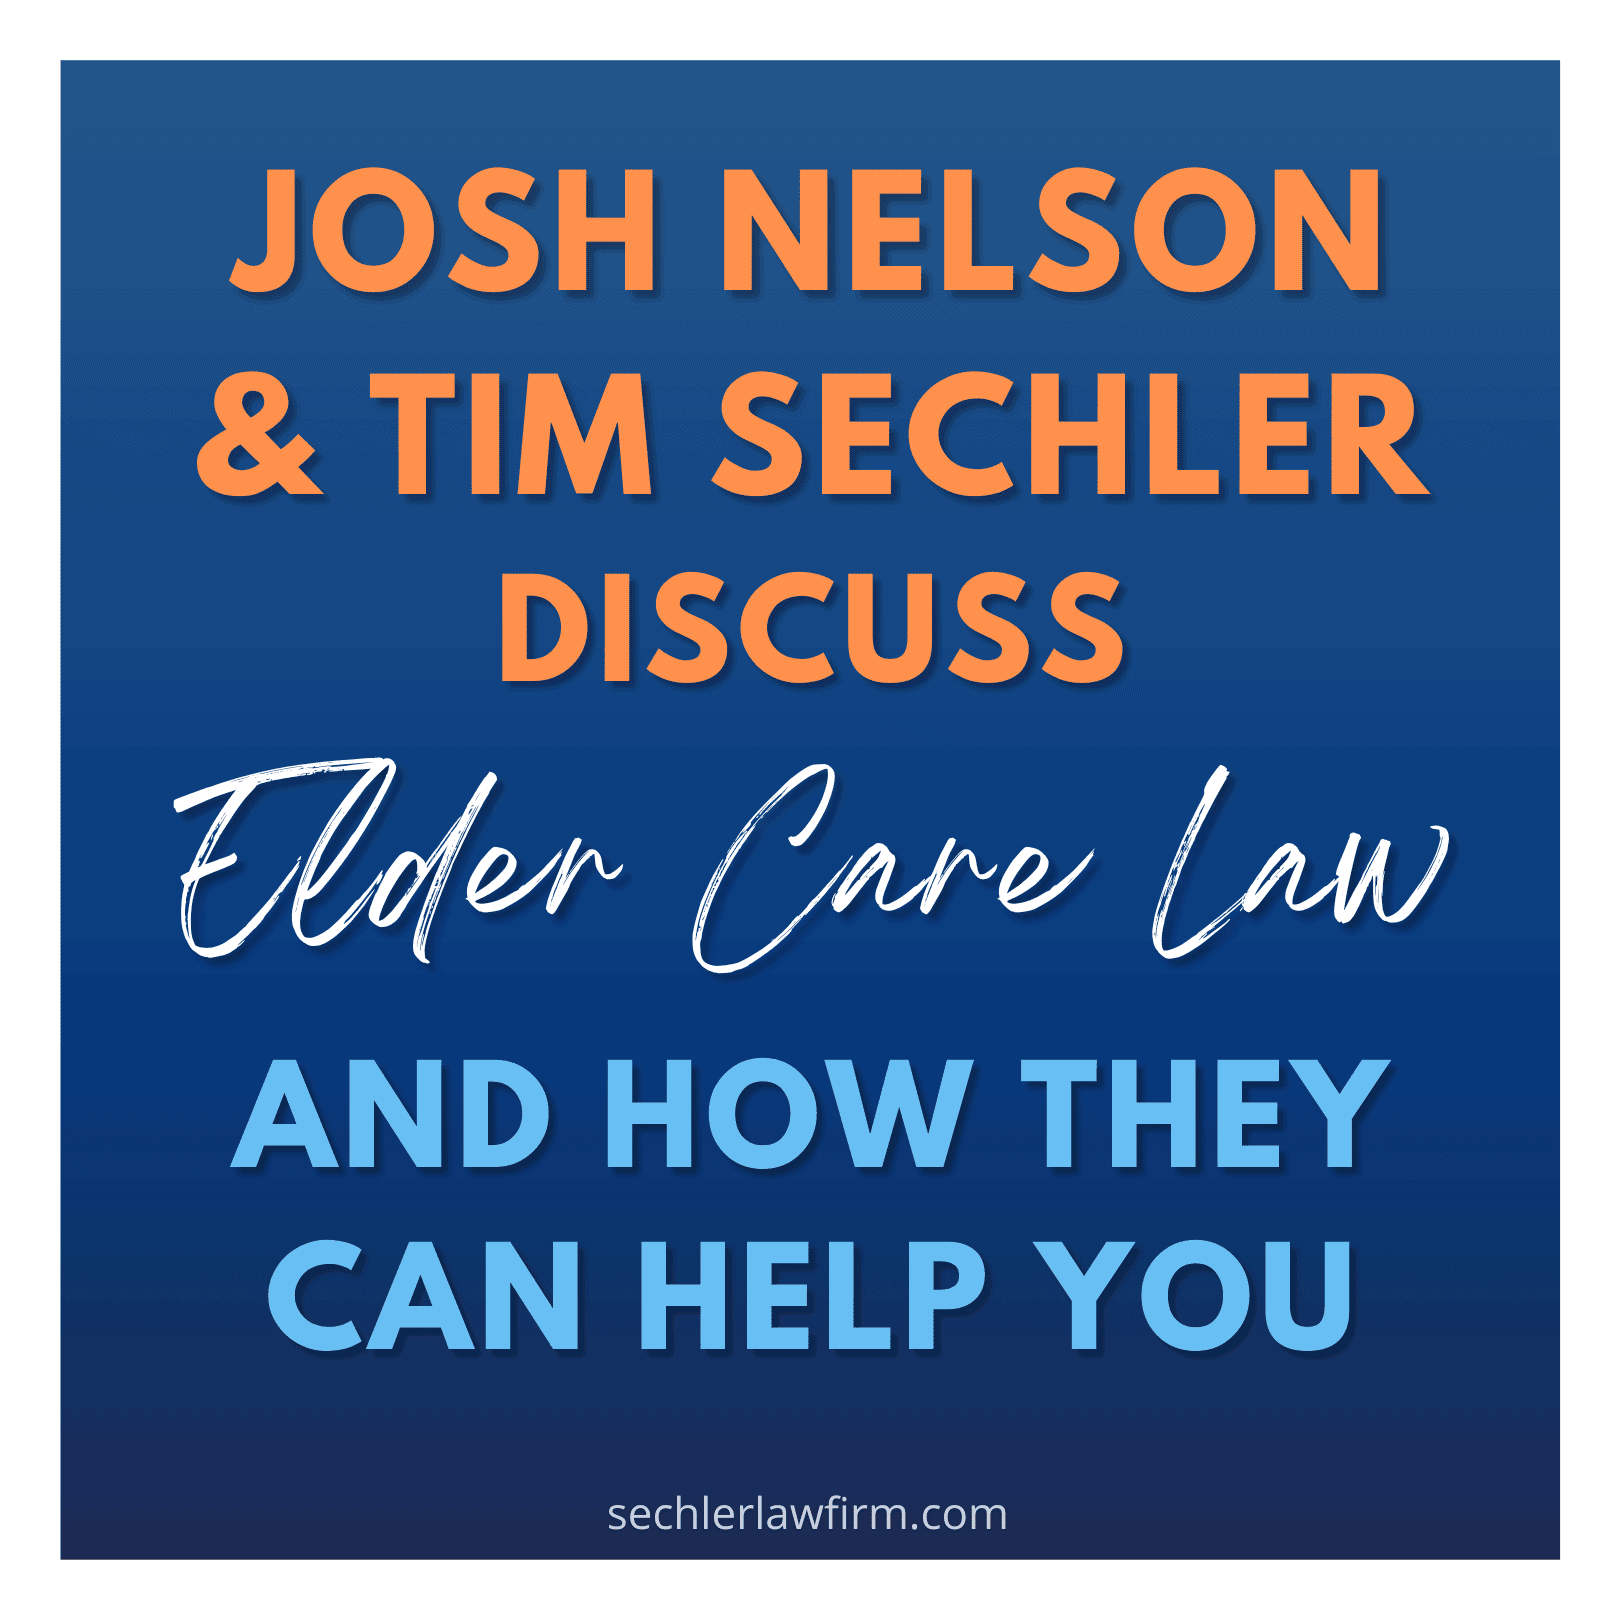 Josh Nelson & Tim Sechler discuss Elder Care Law